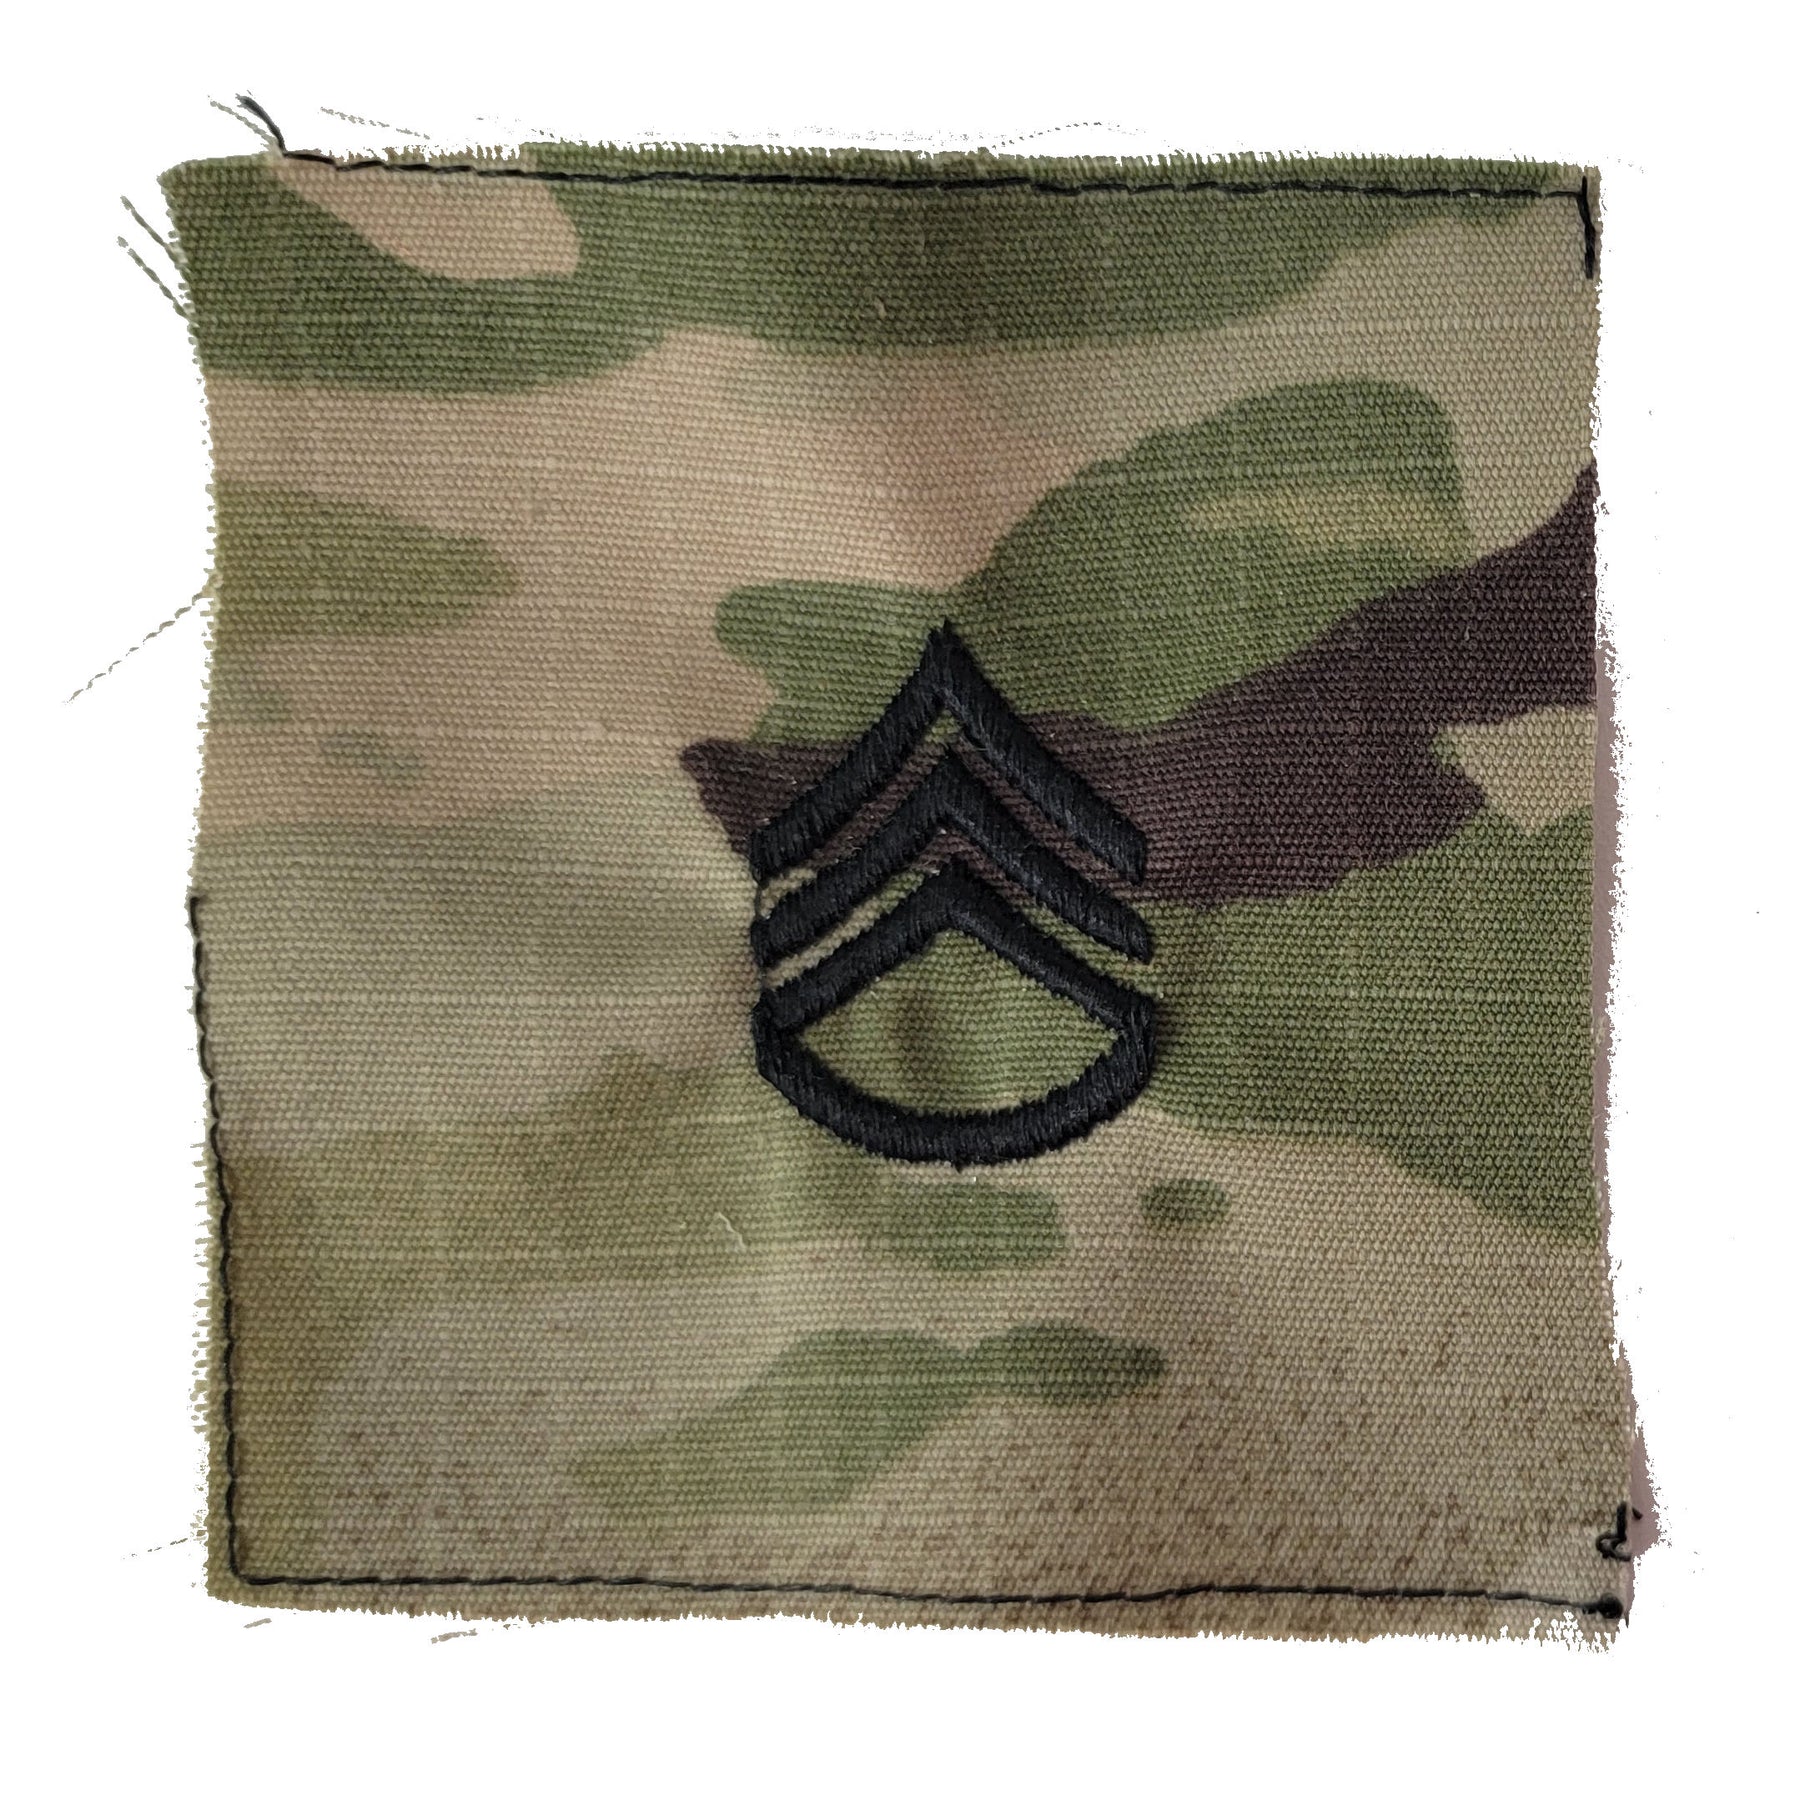 Sew-On U.S. Army OCP Rank Insignia - CHEST - 2x2